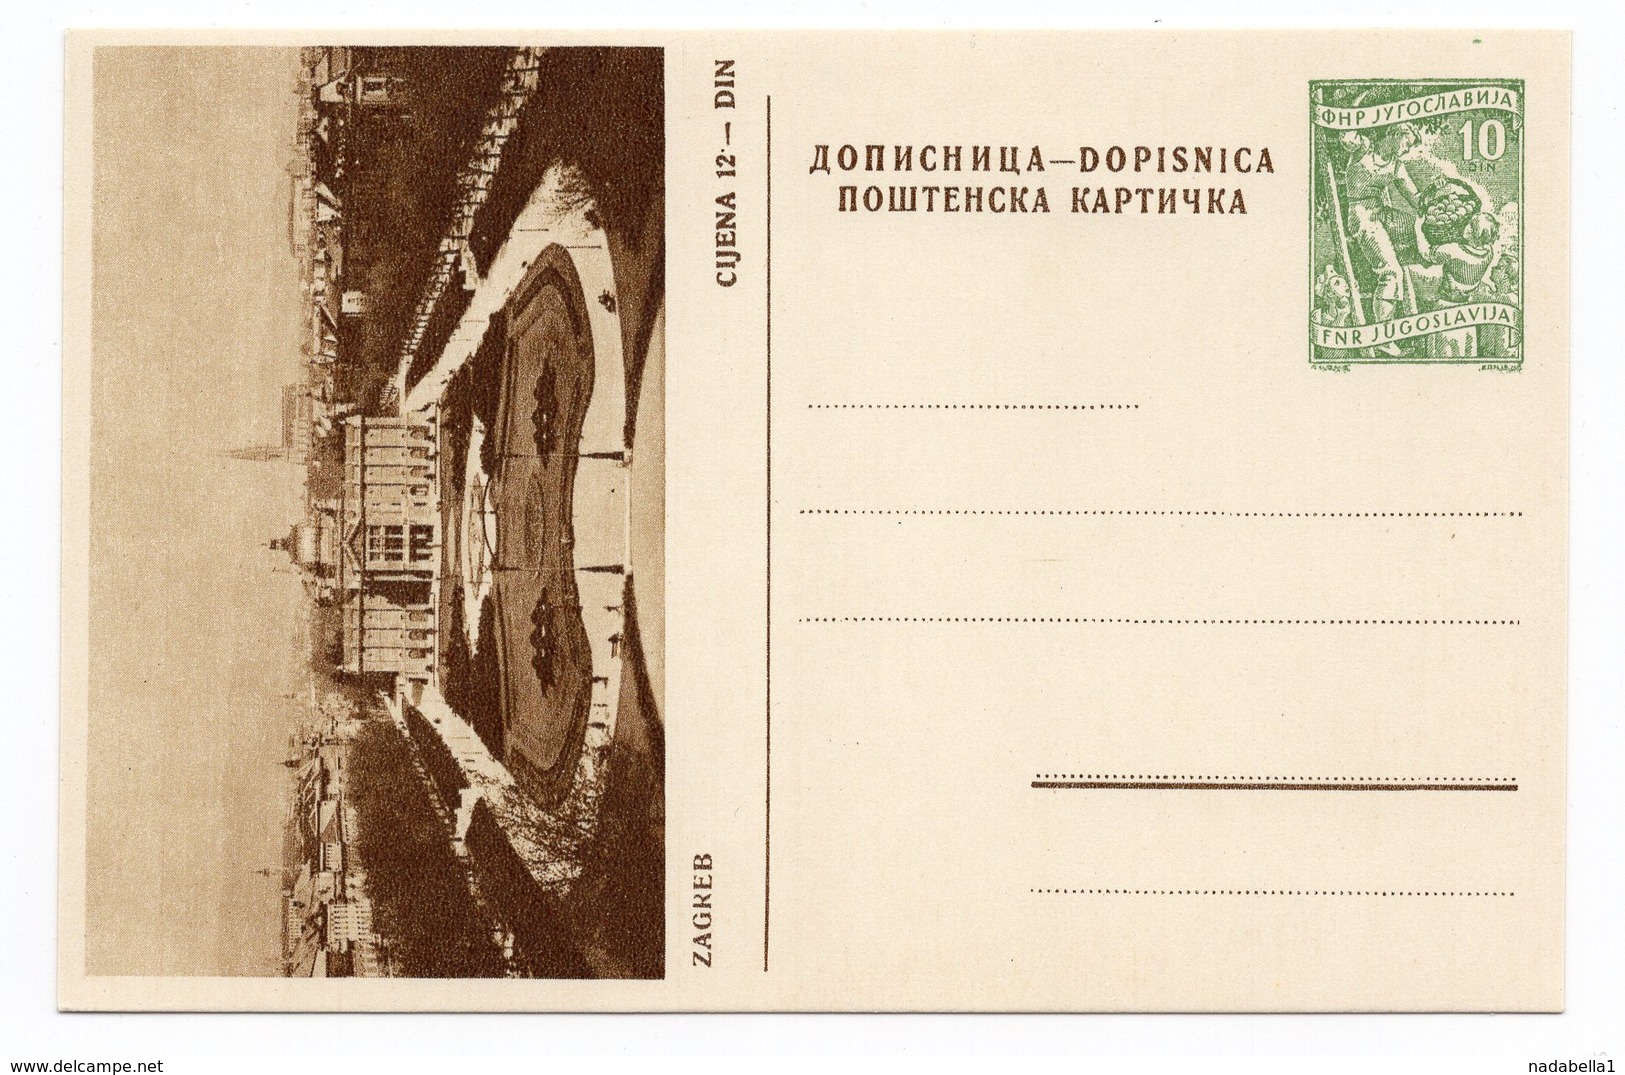 1956 YUGOSLAVIA, CROATIA, ZAGREB, KAZALISTE, THEATRE,10 DINARA GREEN, ILLUSTRATED STATIONERY CARD, MINT - Postal Stationery